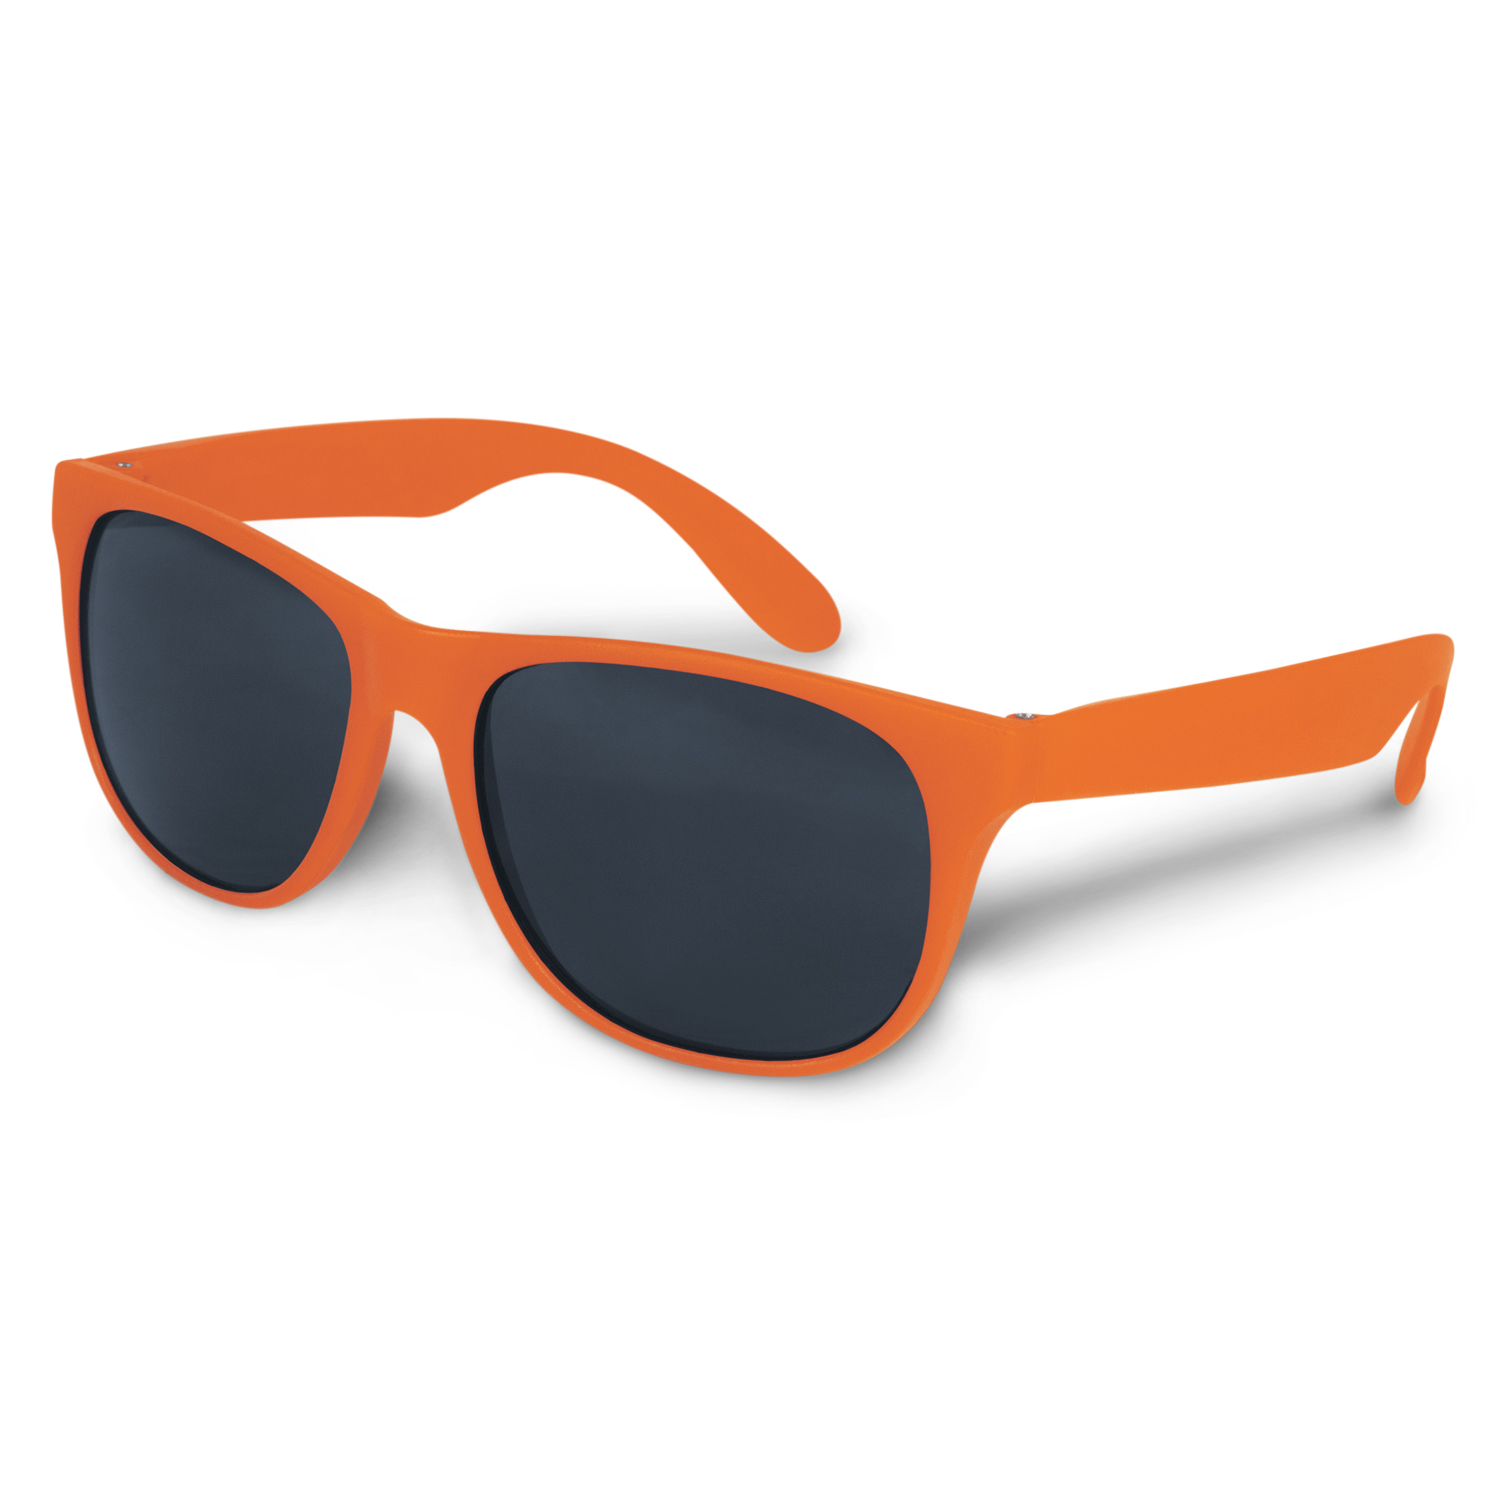 Sunglasses -  Malibu Basic in assorted colours - Orange Malibu